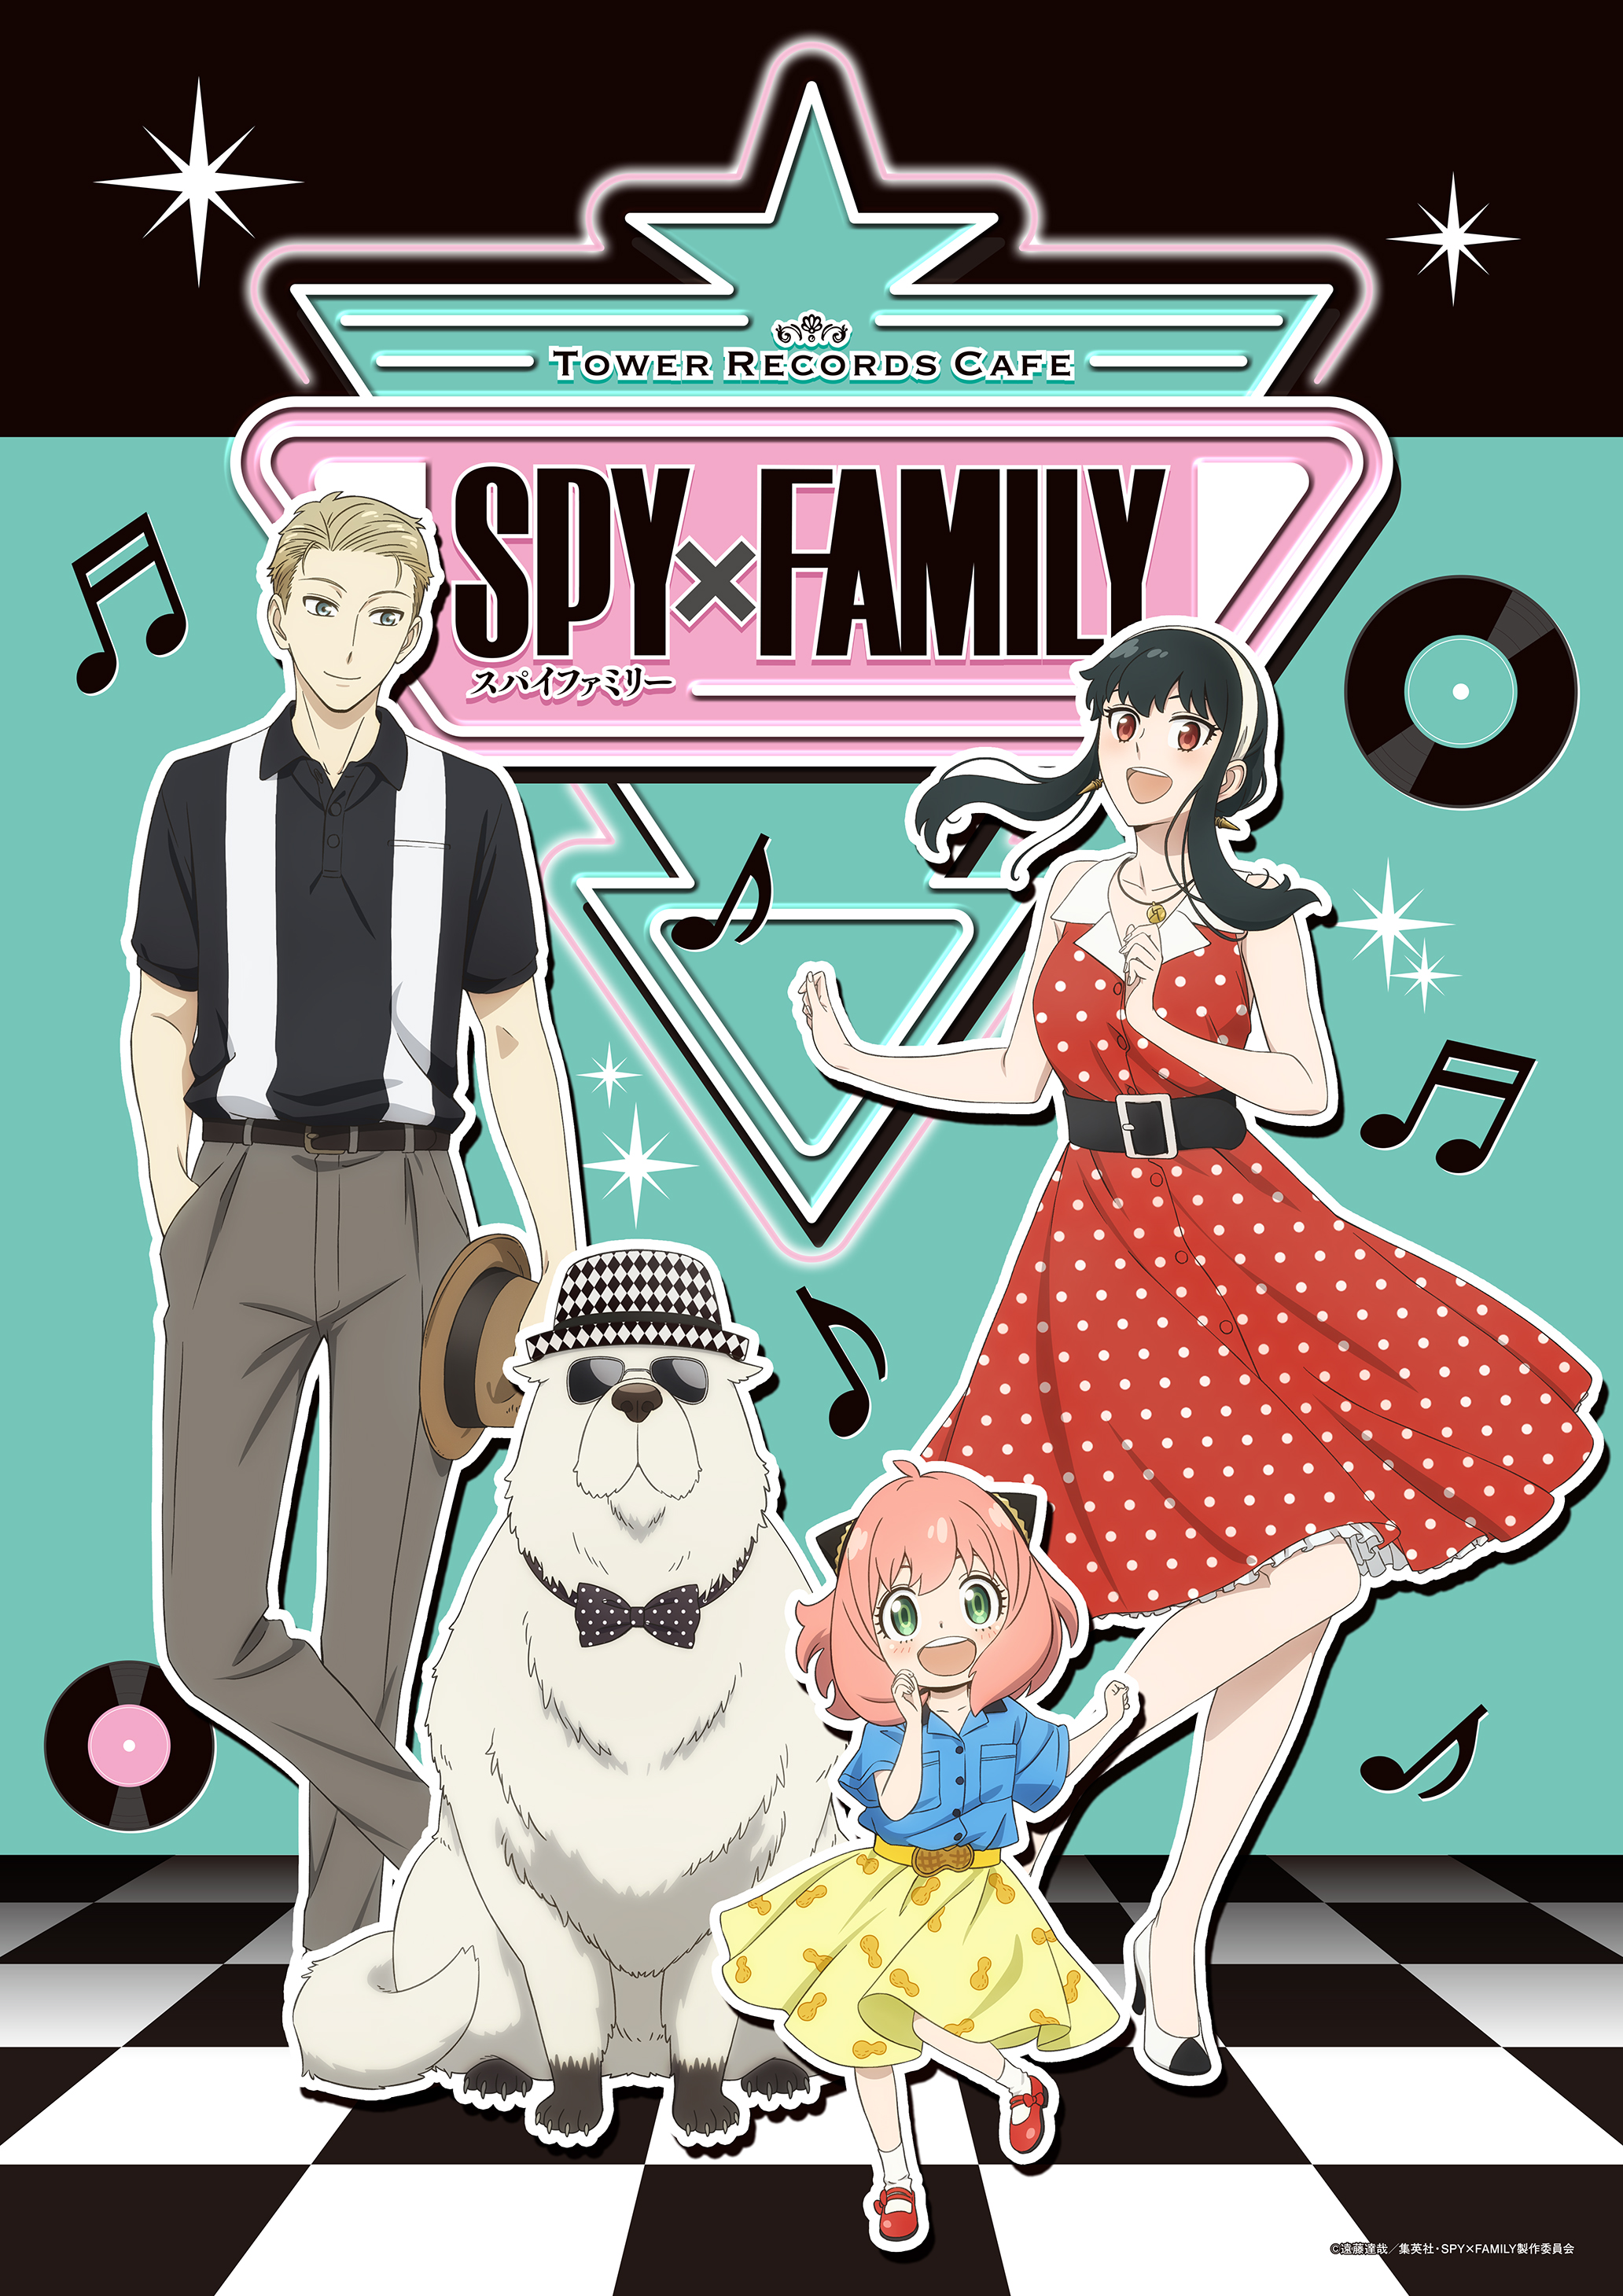 TVアニメ『SPY×FAMILY』× TOWER RECORDS CAFEコラボが表参道・名古屋・大阪にて開催決定！